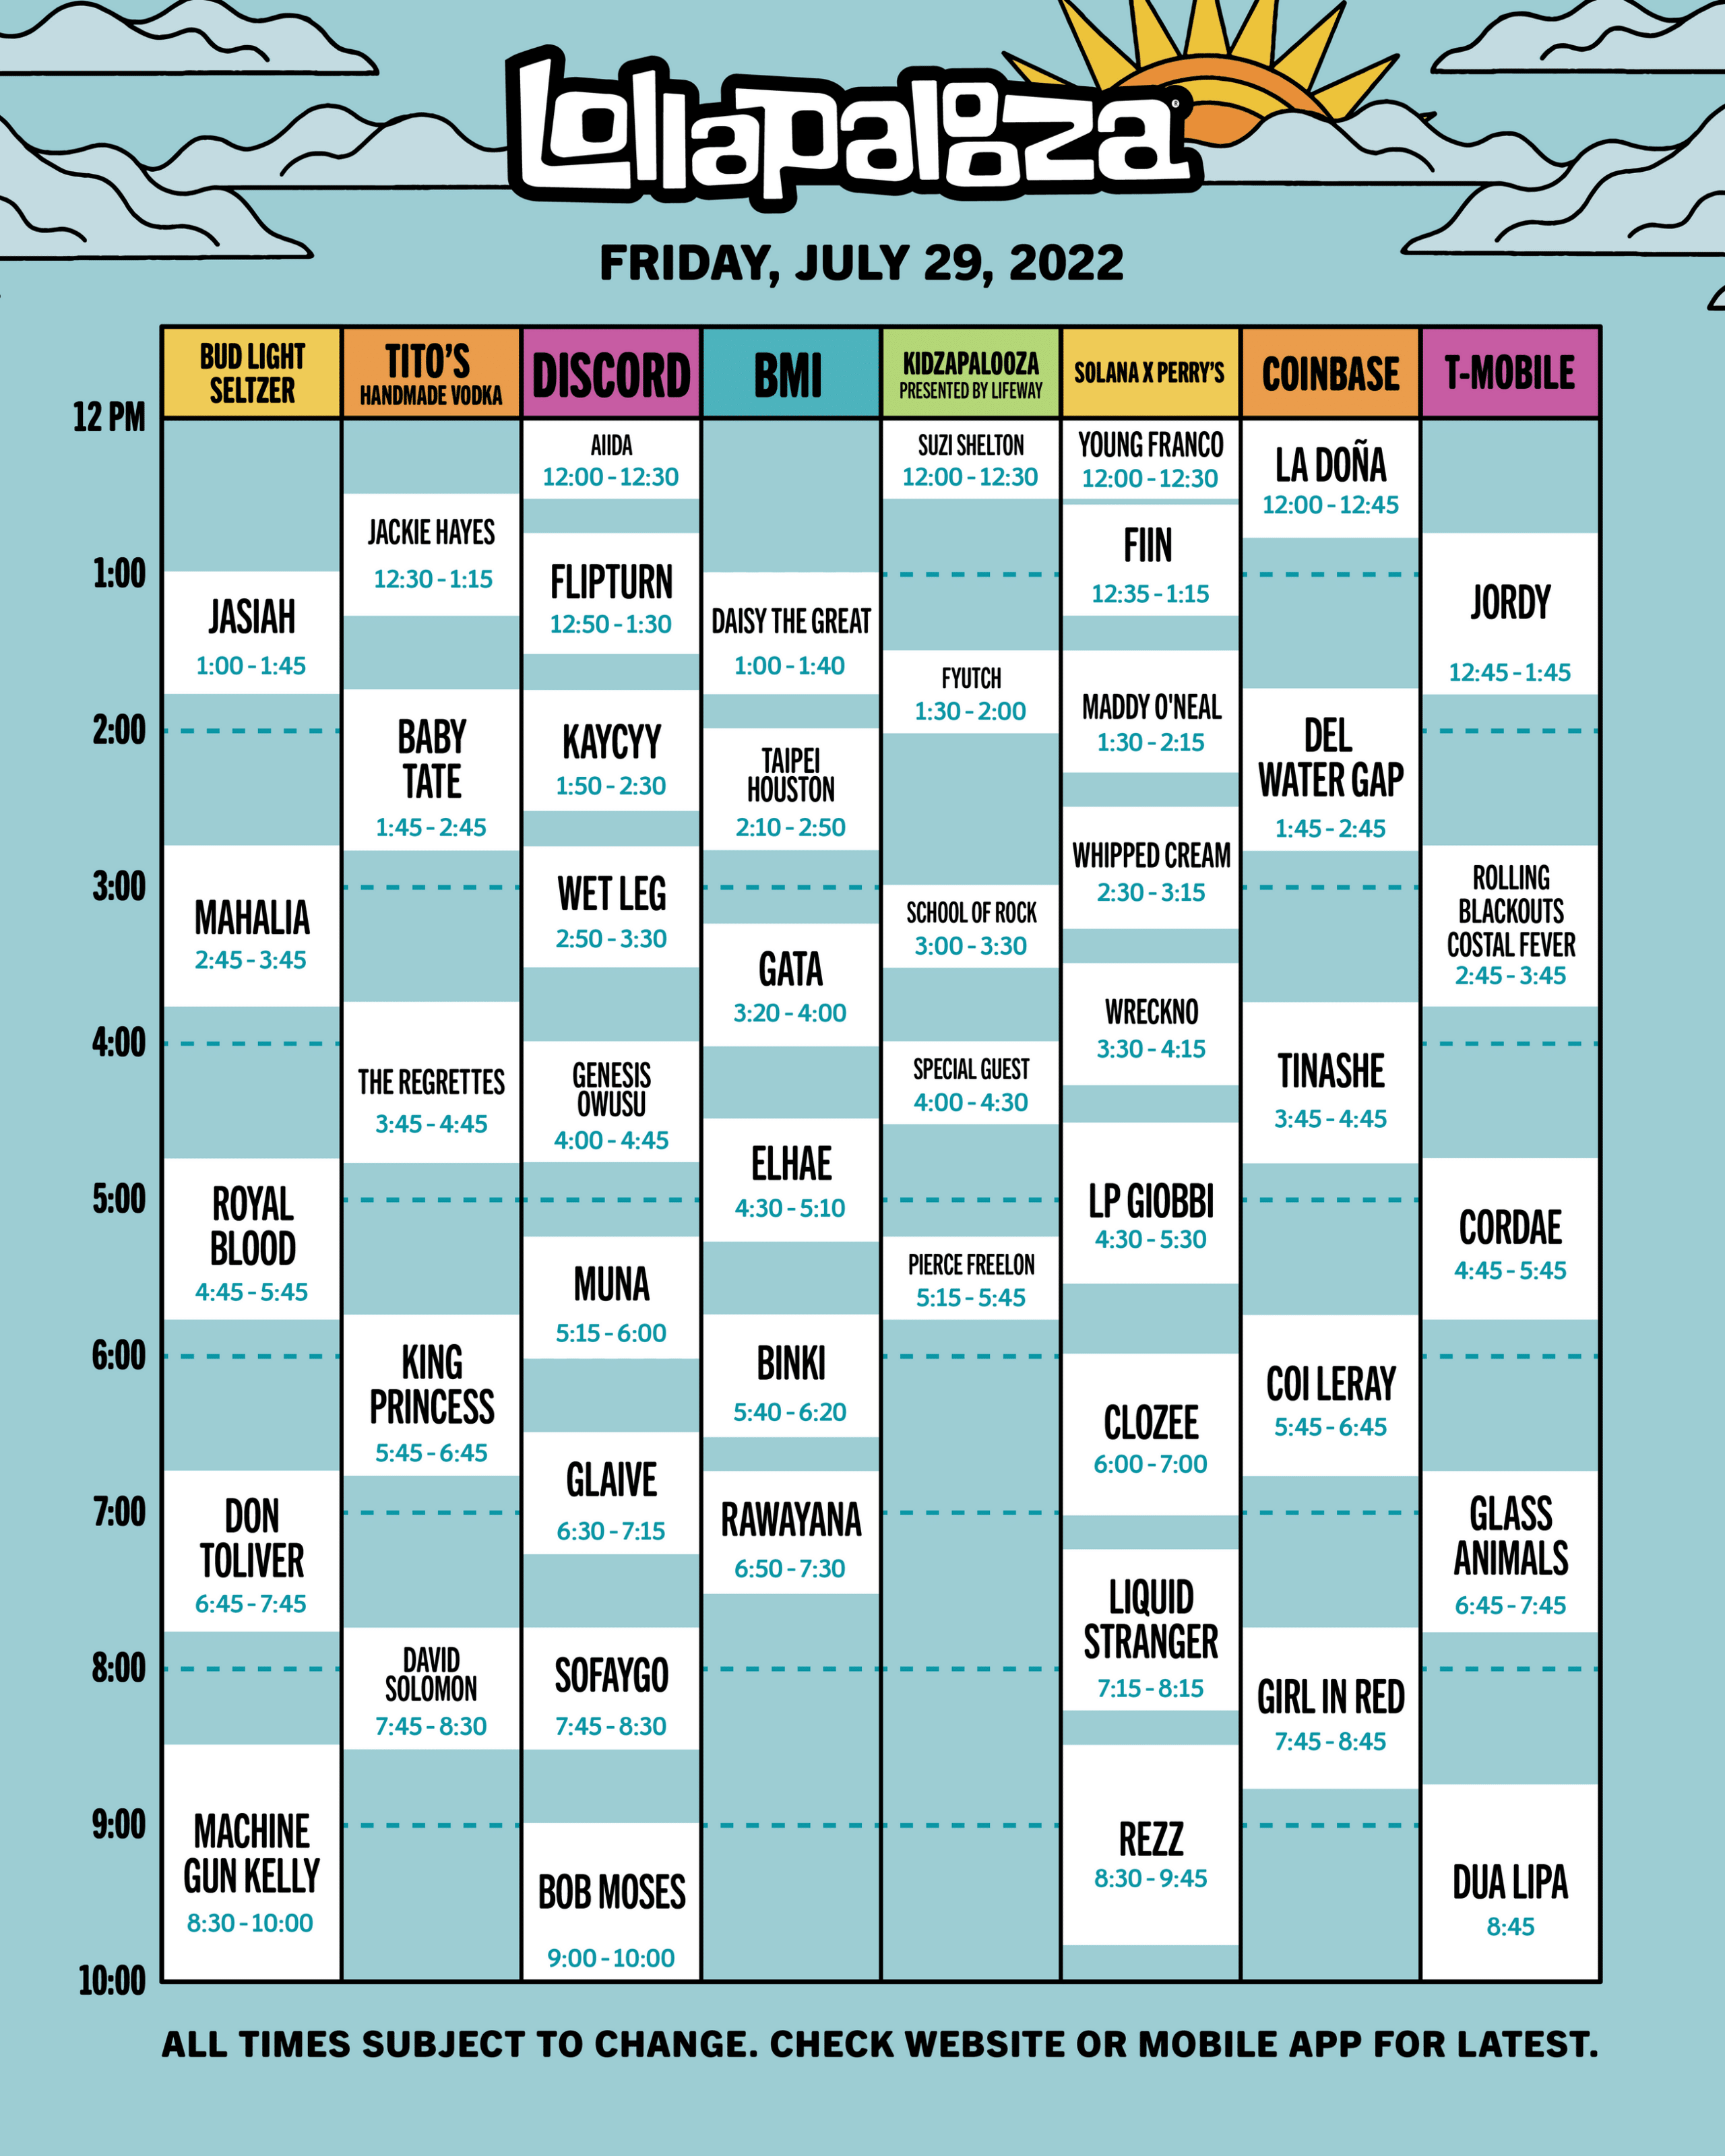 Friday Lollapalooza 2022 Schedule